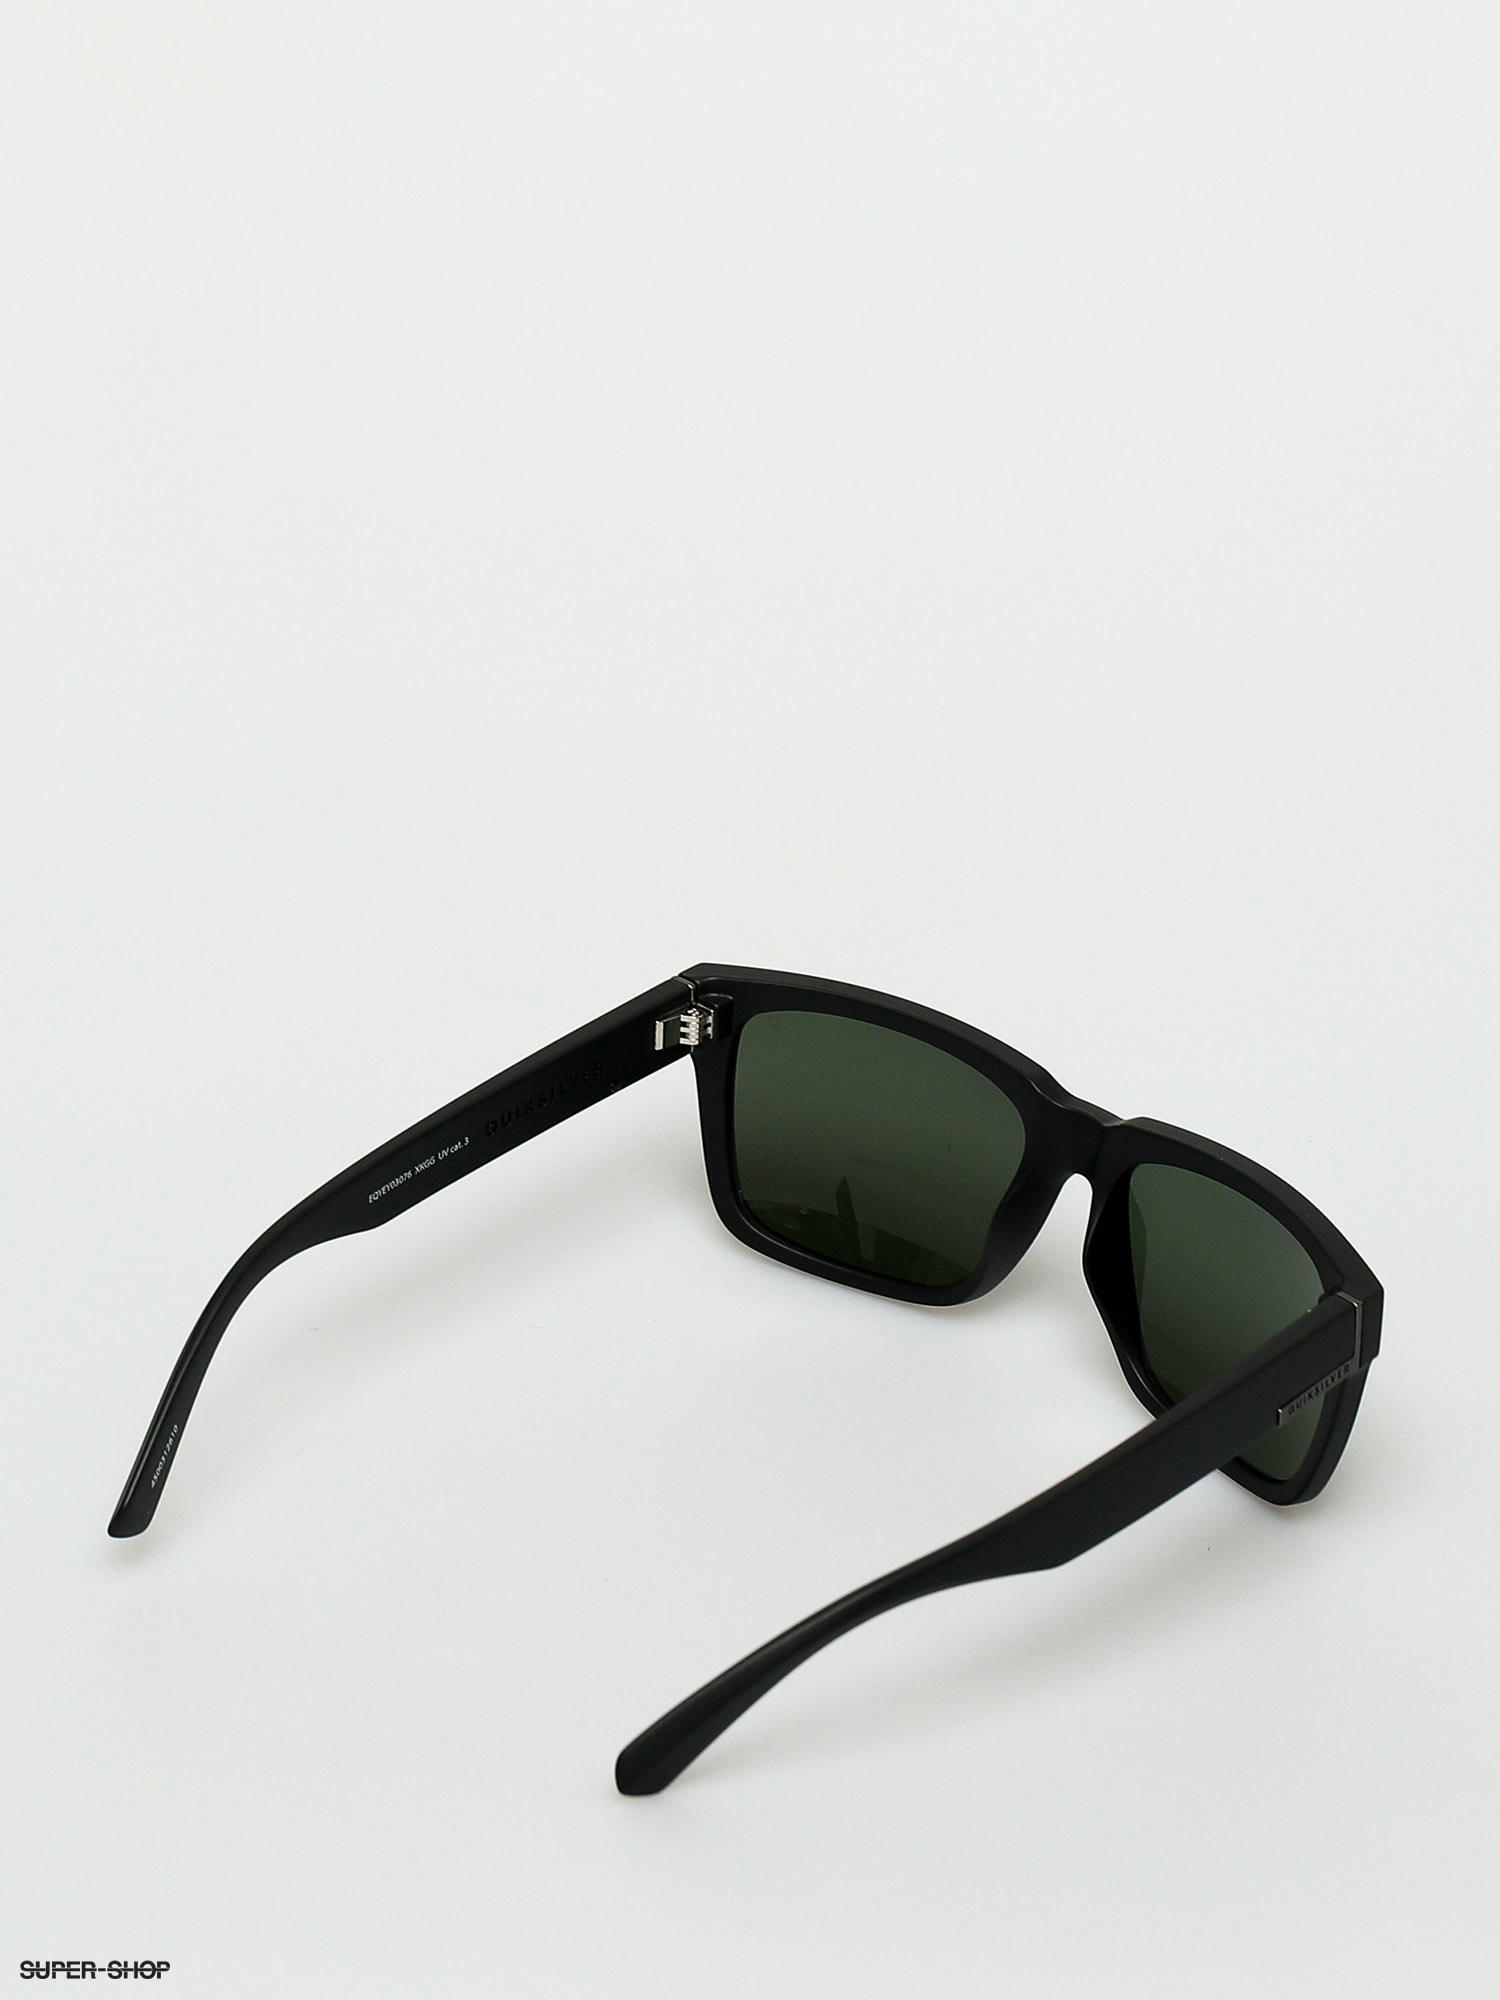 Quiksilver Bruiser Polarized (matte p) Sunglasses black/green